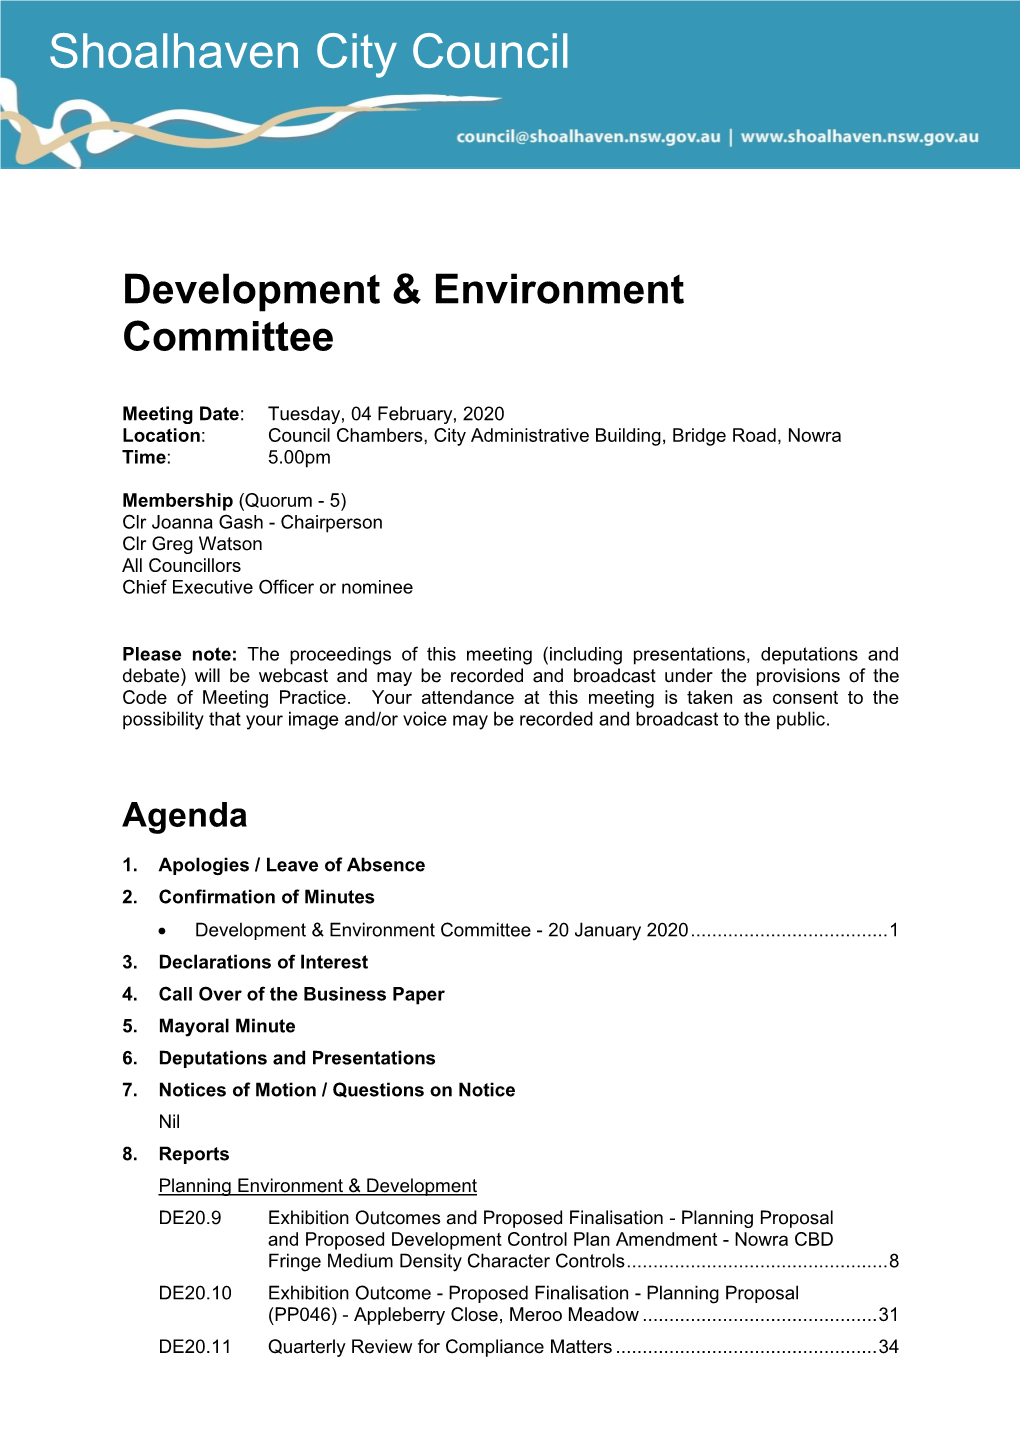 Development & Environment Committee